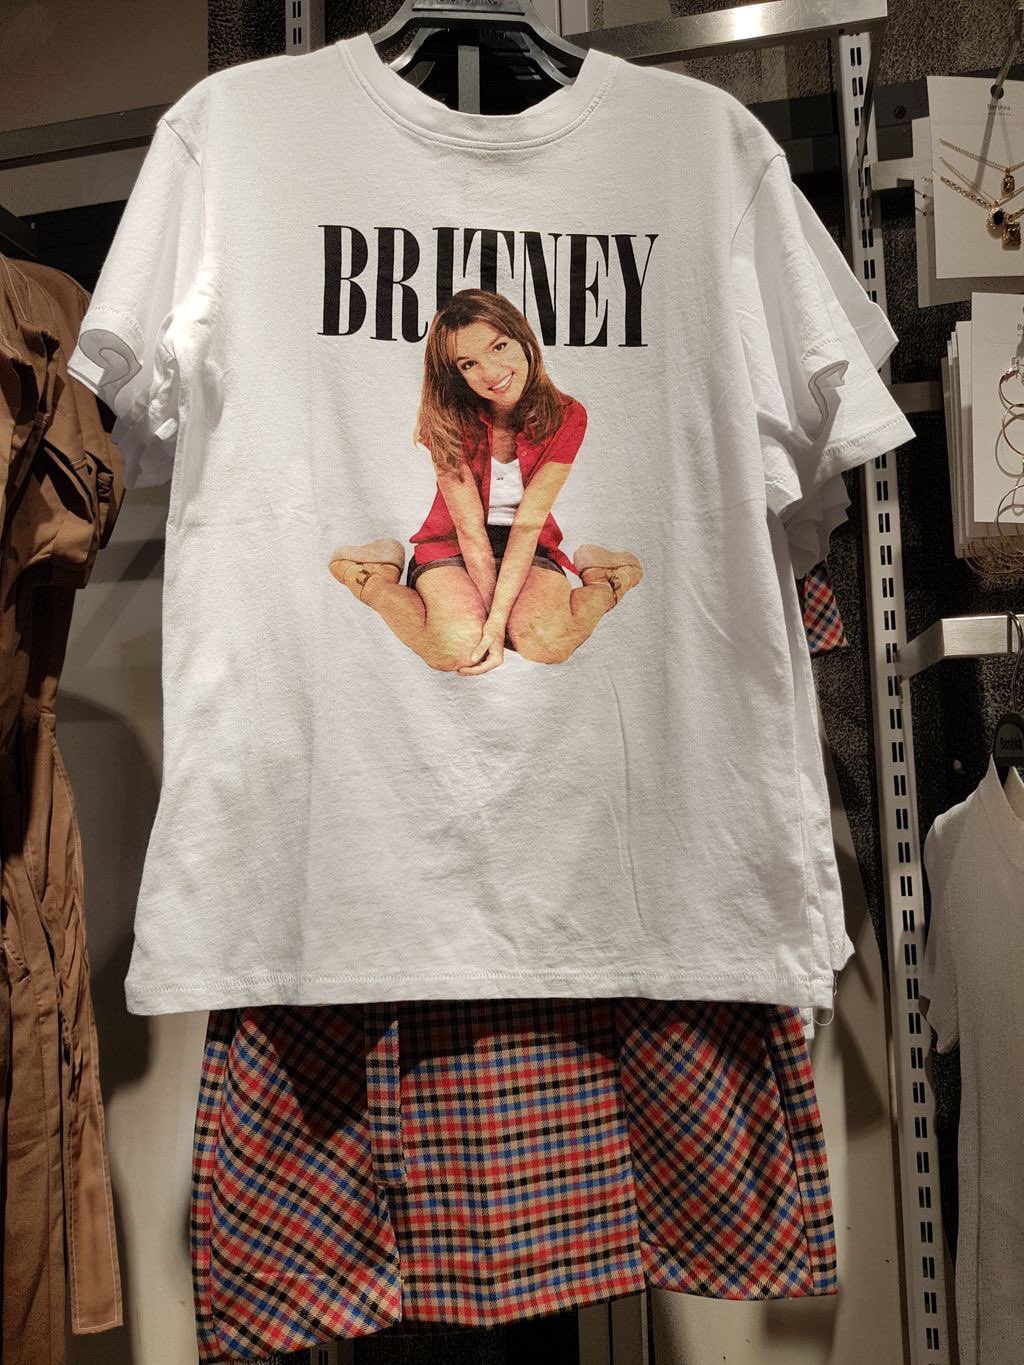 Indirecto paciente exageración 🎄꧁☆☬๖ۣۜViͥckͣyͫ☬☆꧂🎄 on Twitter: "Necesito esta camiseta del @Bershka  @Bershka_ES osea YA!! @britneyspears #BritneyForever #BritneySpears  #ItsBritneyBitch #Bershka https://t.co/fjBOrGJMkt" / Twitter